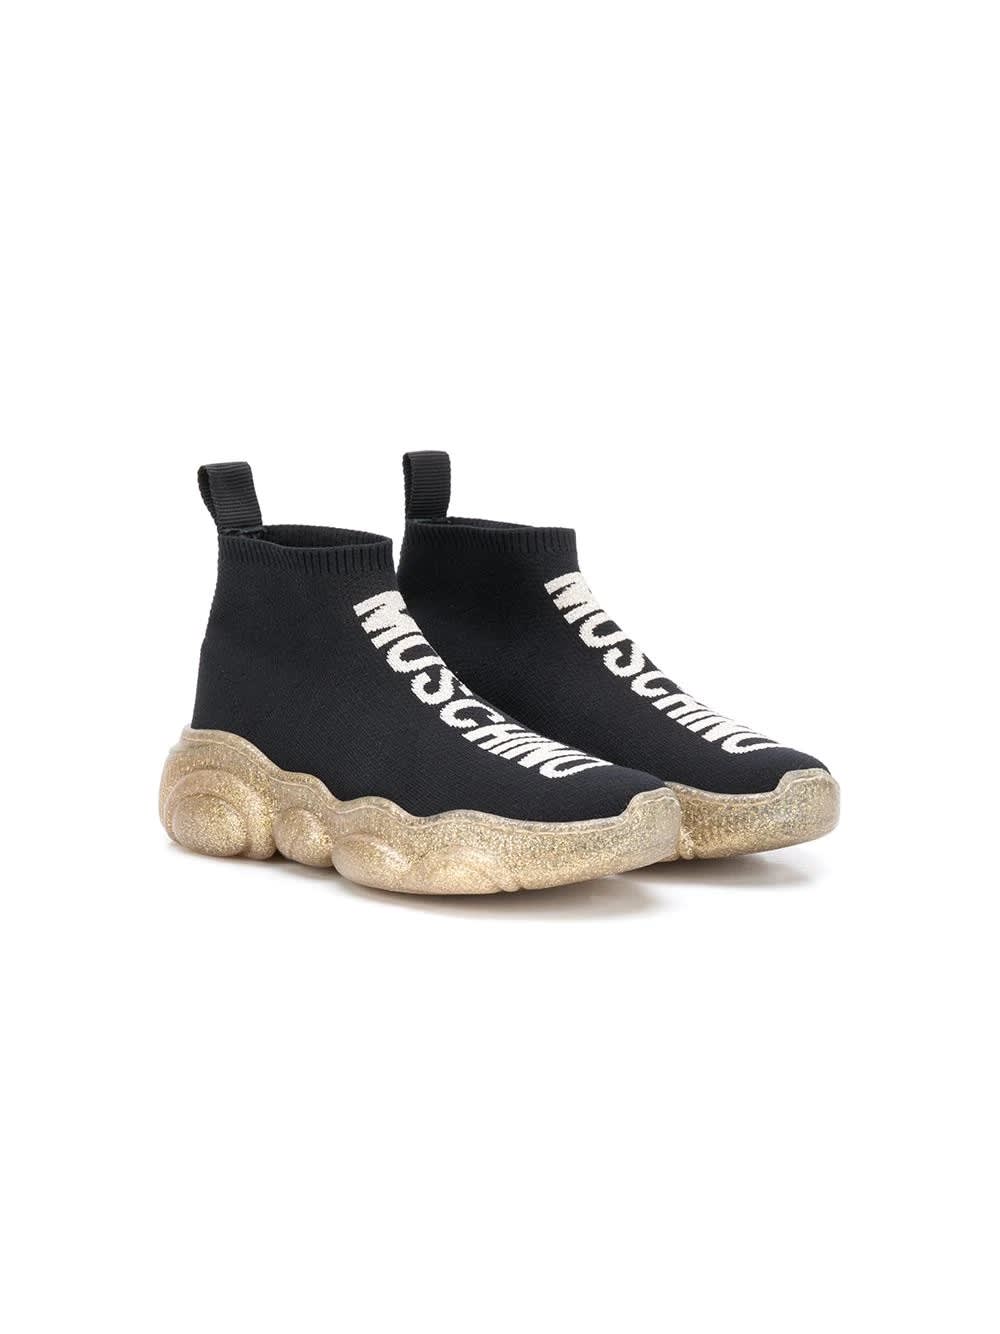 Buy Moschino Moschino Kids online, shop Moschino shoes with free shipping